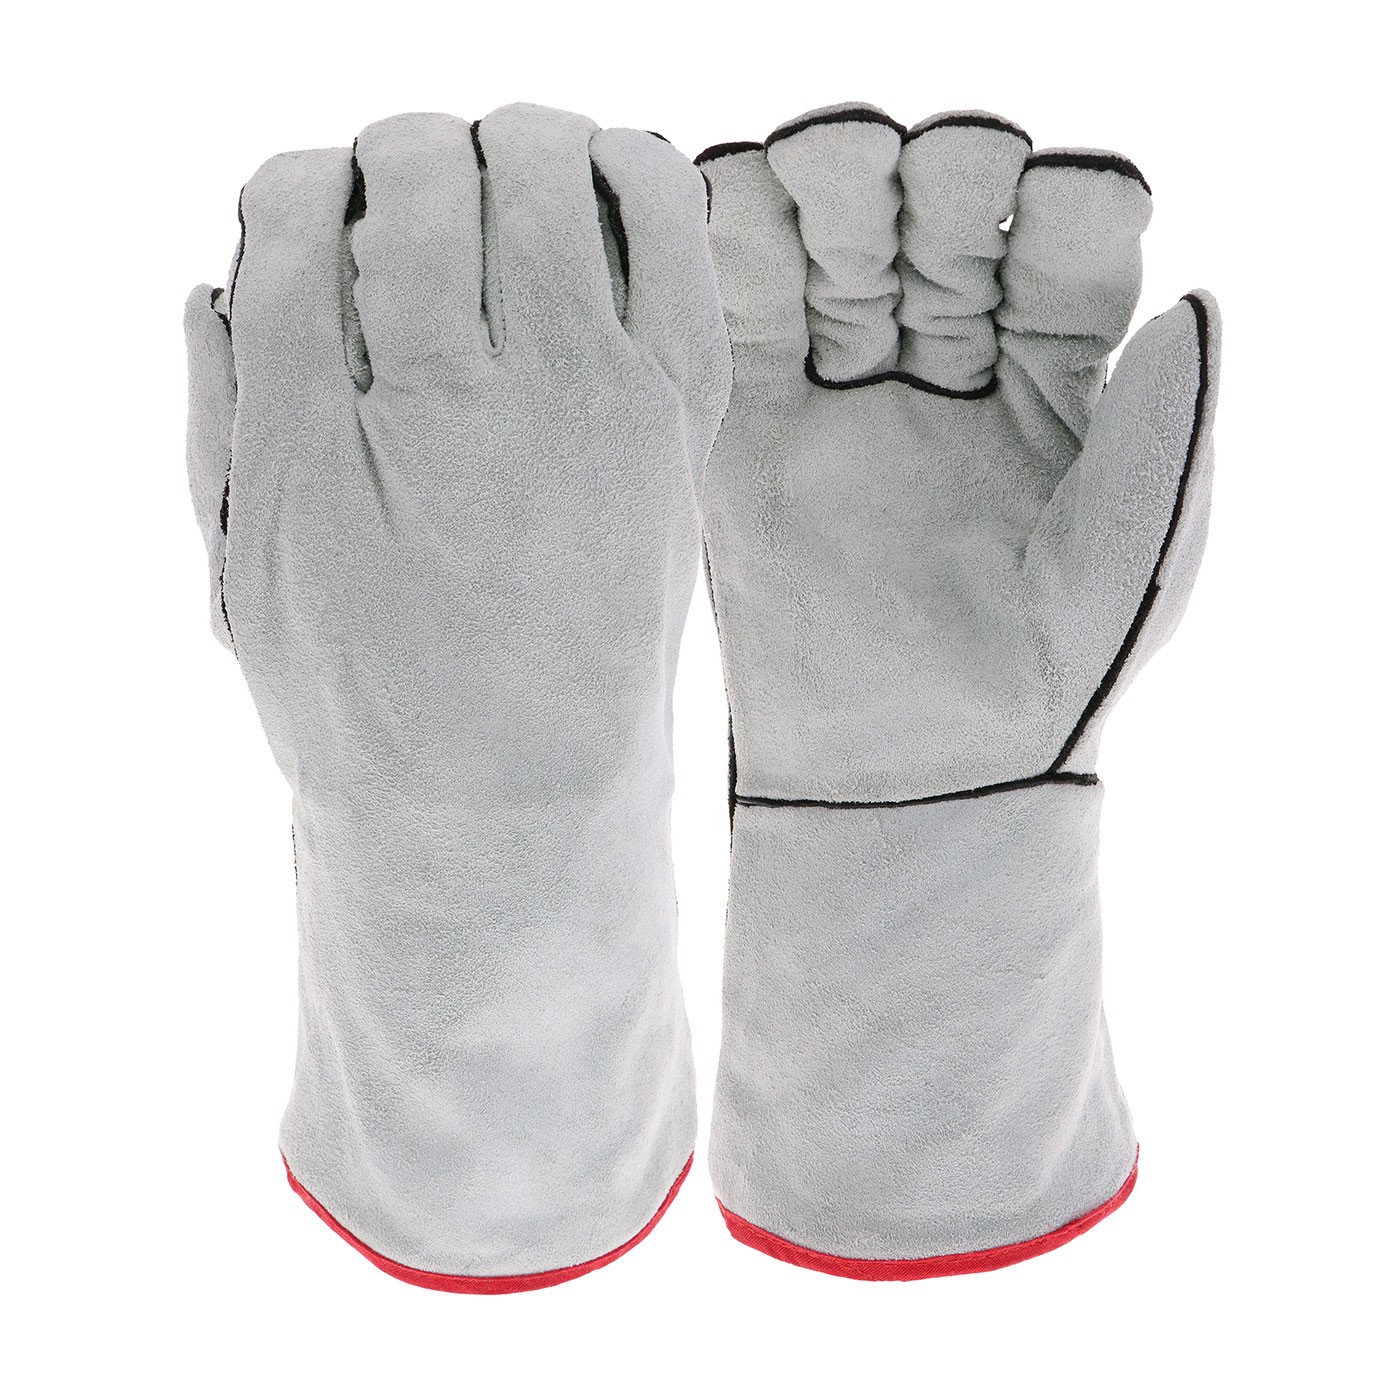 Ironcat® Split Cowhide Leather Welder's Glove with Cotton Liner  (#930)